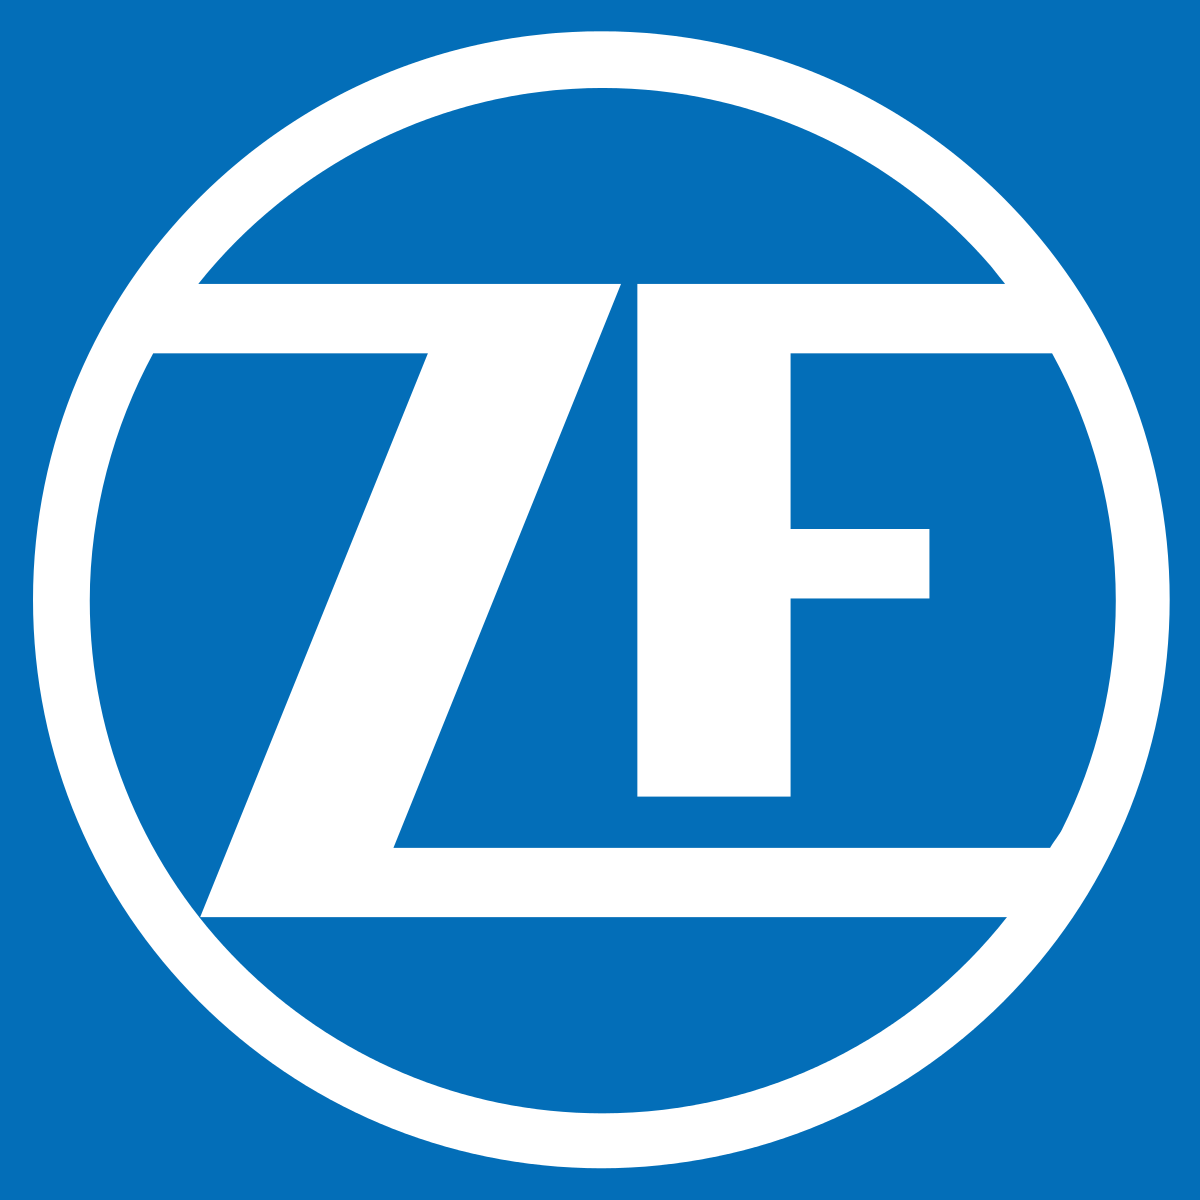 Zf Friedrichshafen (electronic Interfaces Business)